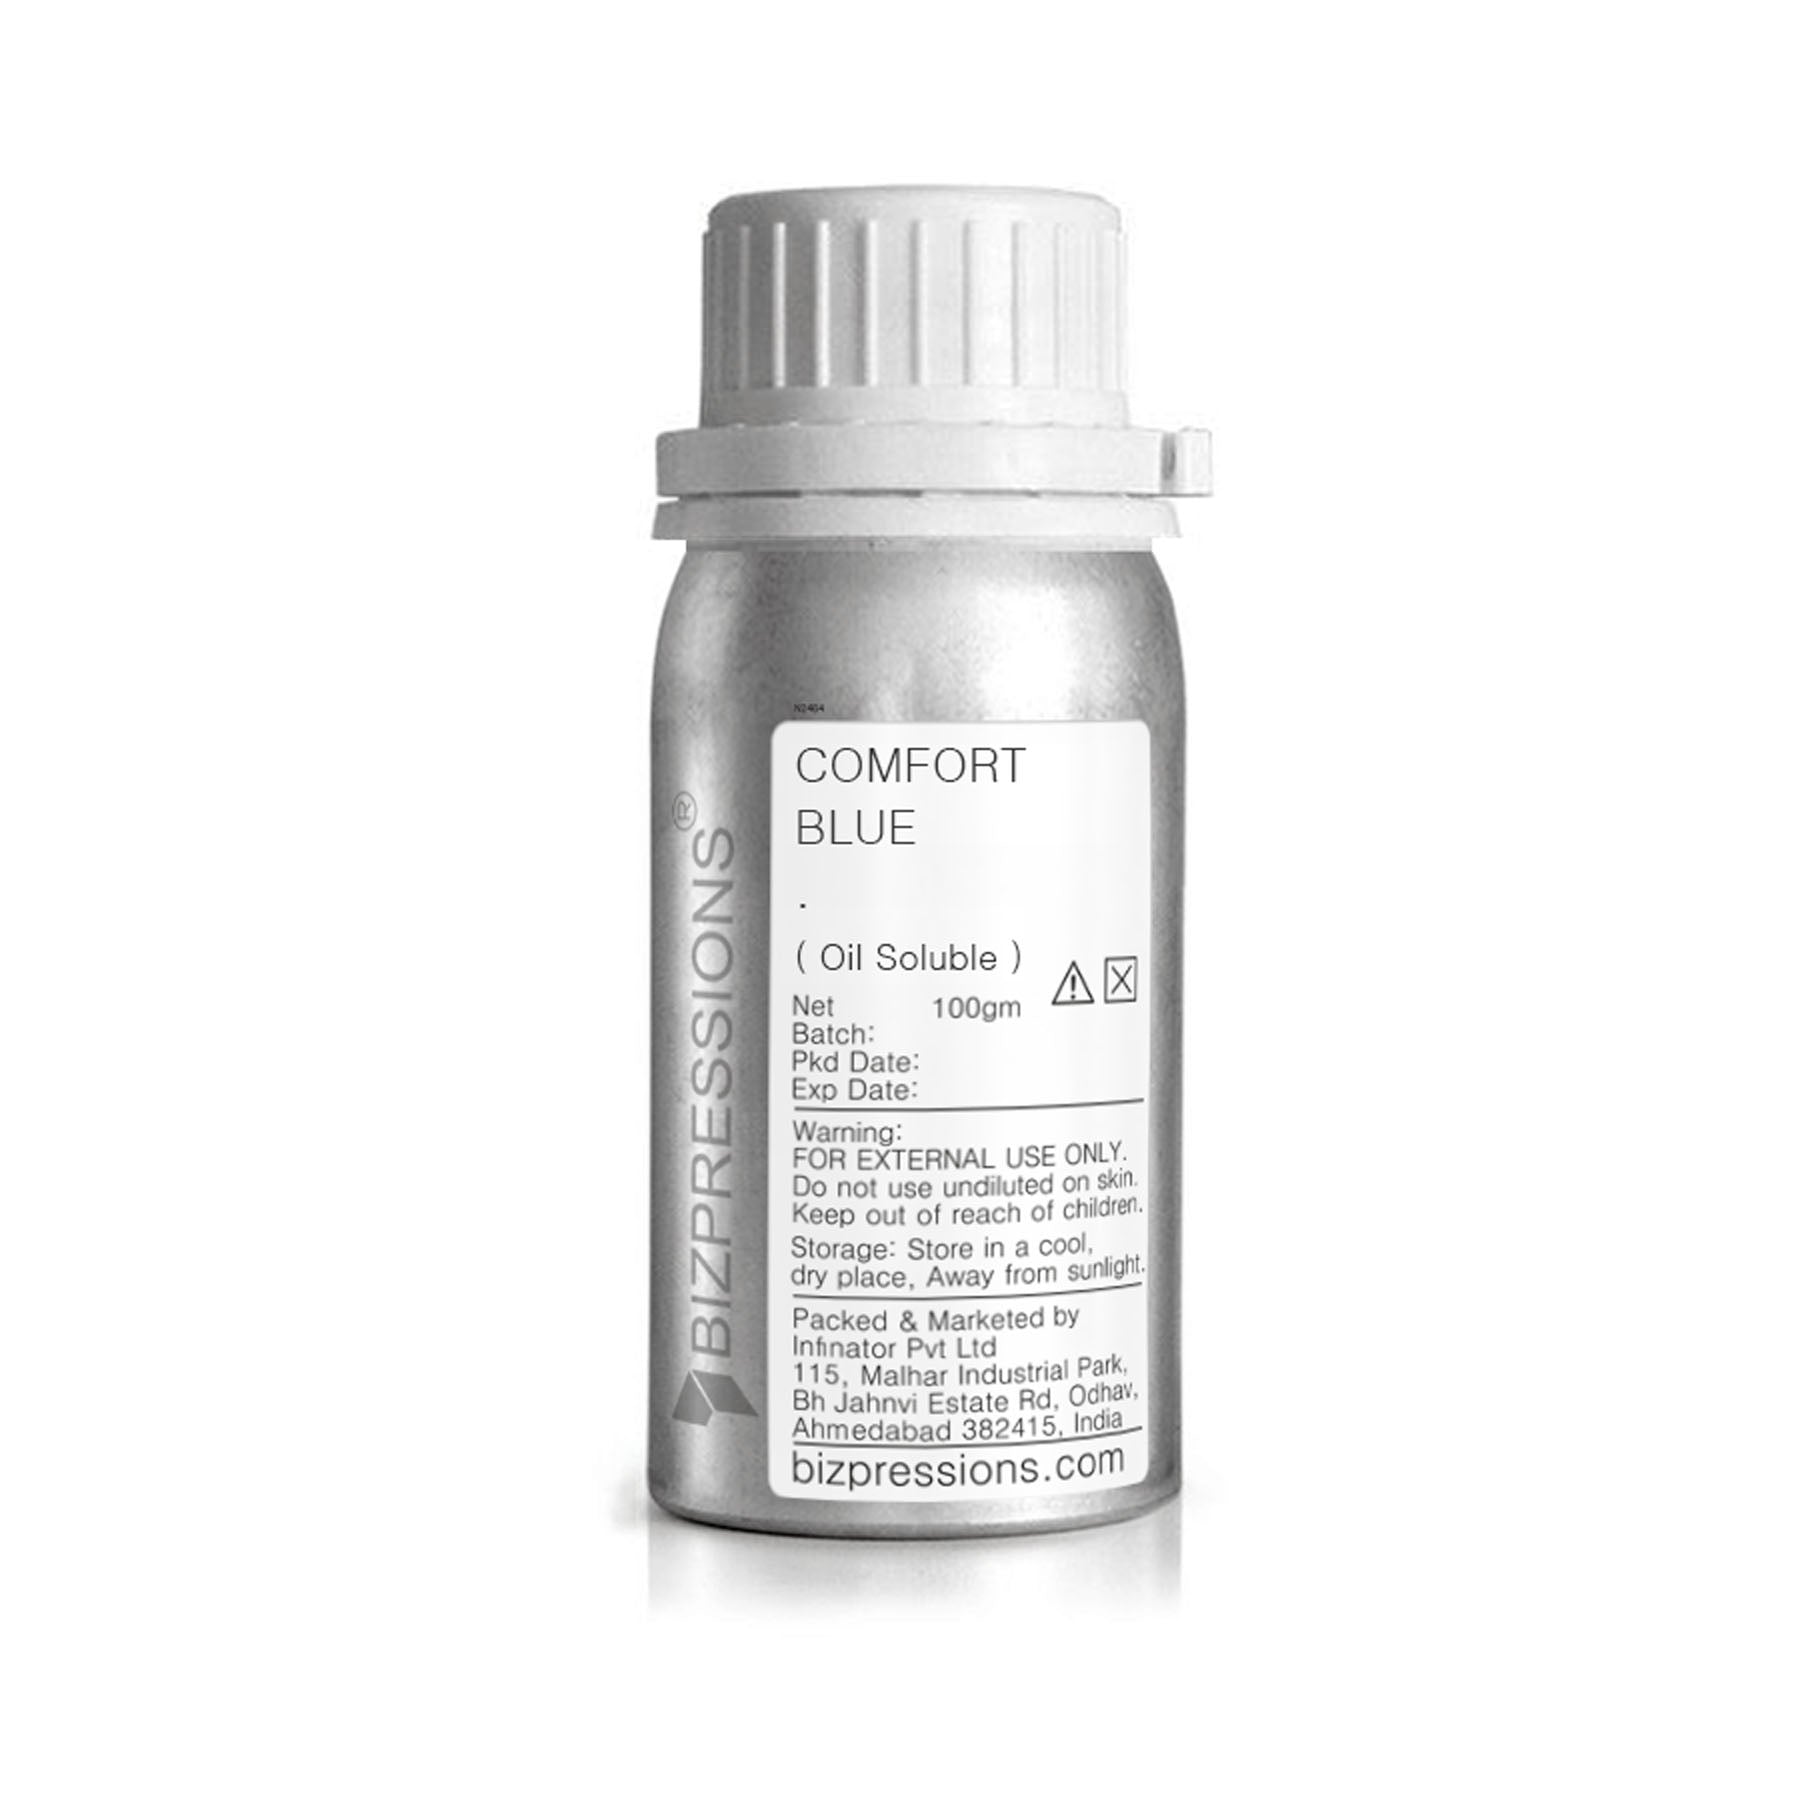 COMFORT BLUE - Fragrance ( Oil Soluble ) - 100 gm